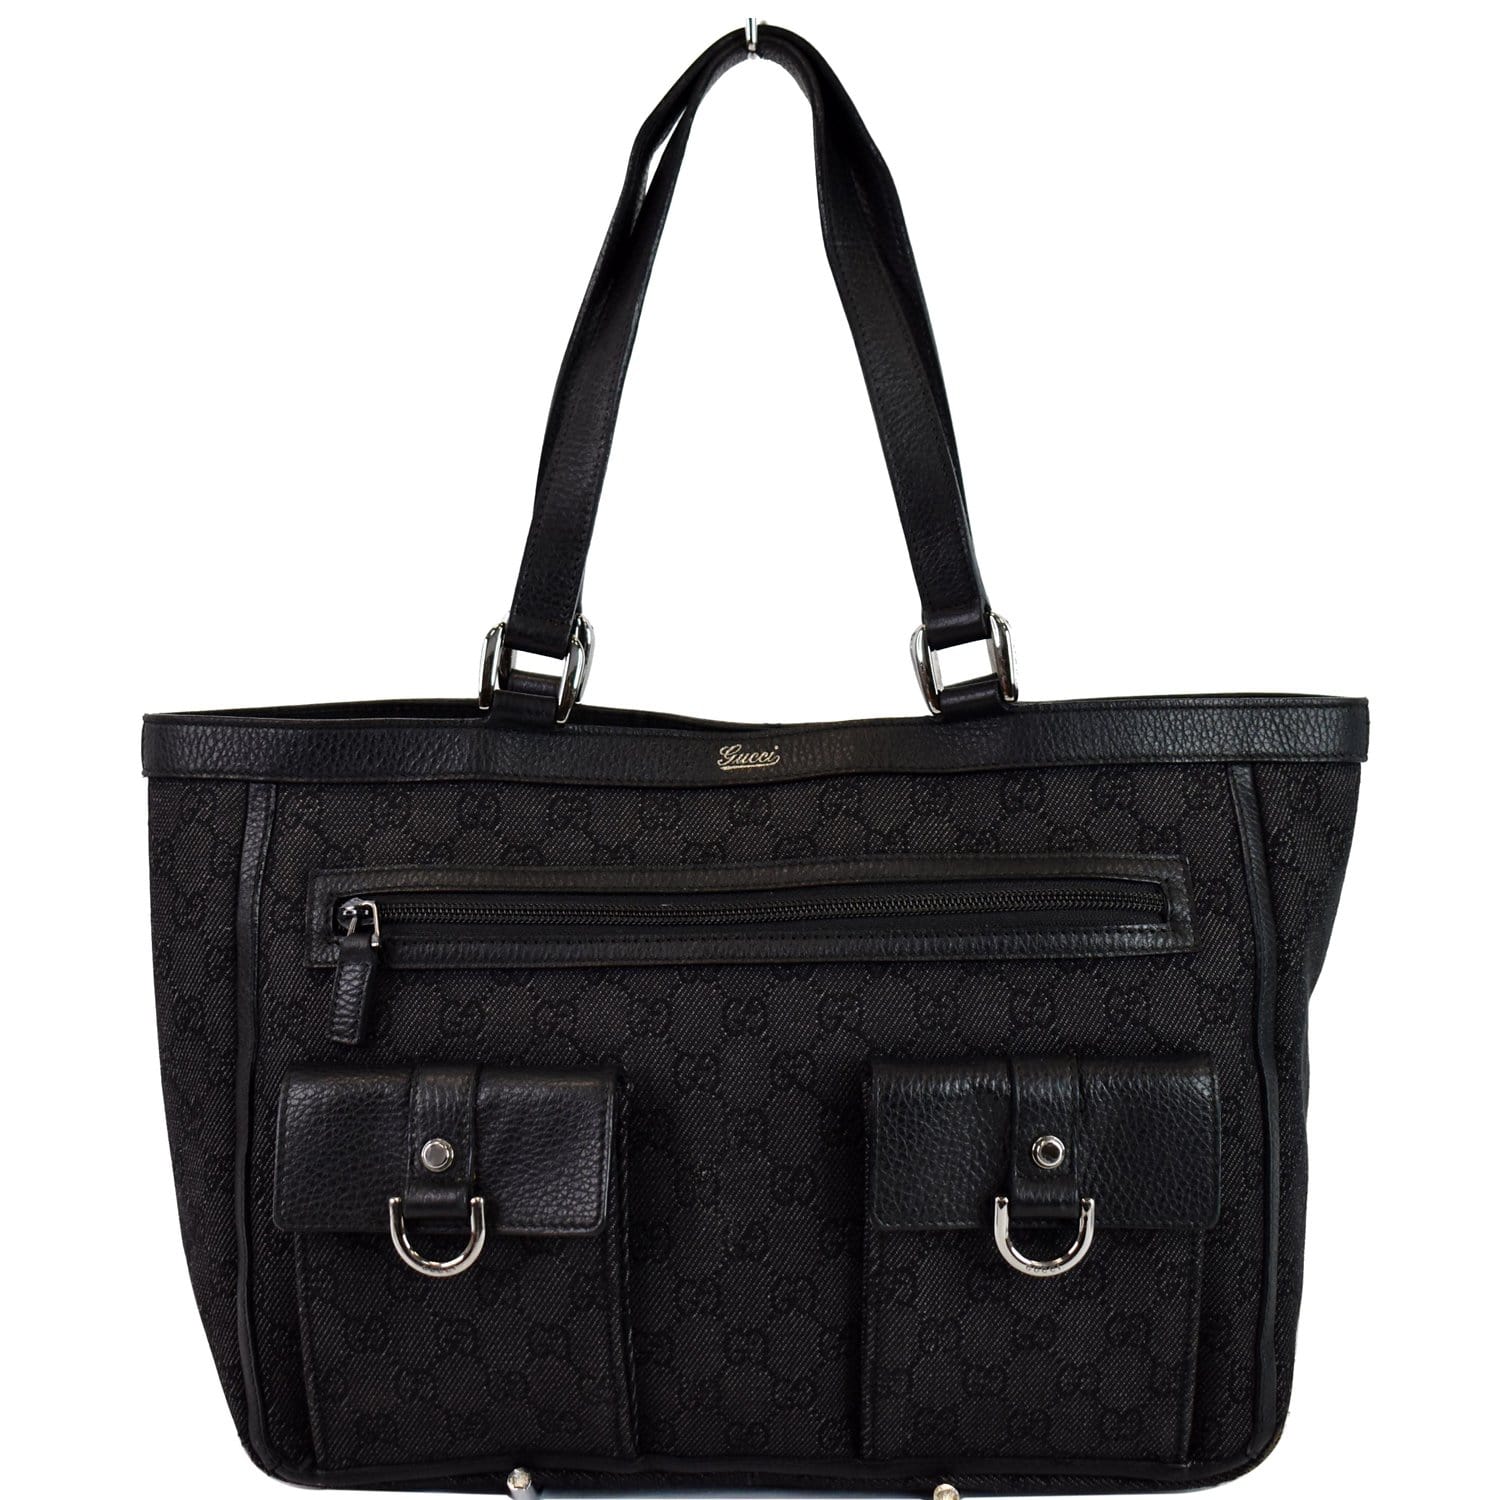 Full Money Back Guarantee Product Gucci shoulder bag GG implim